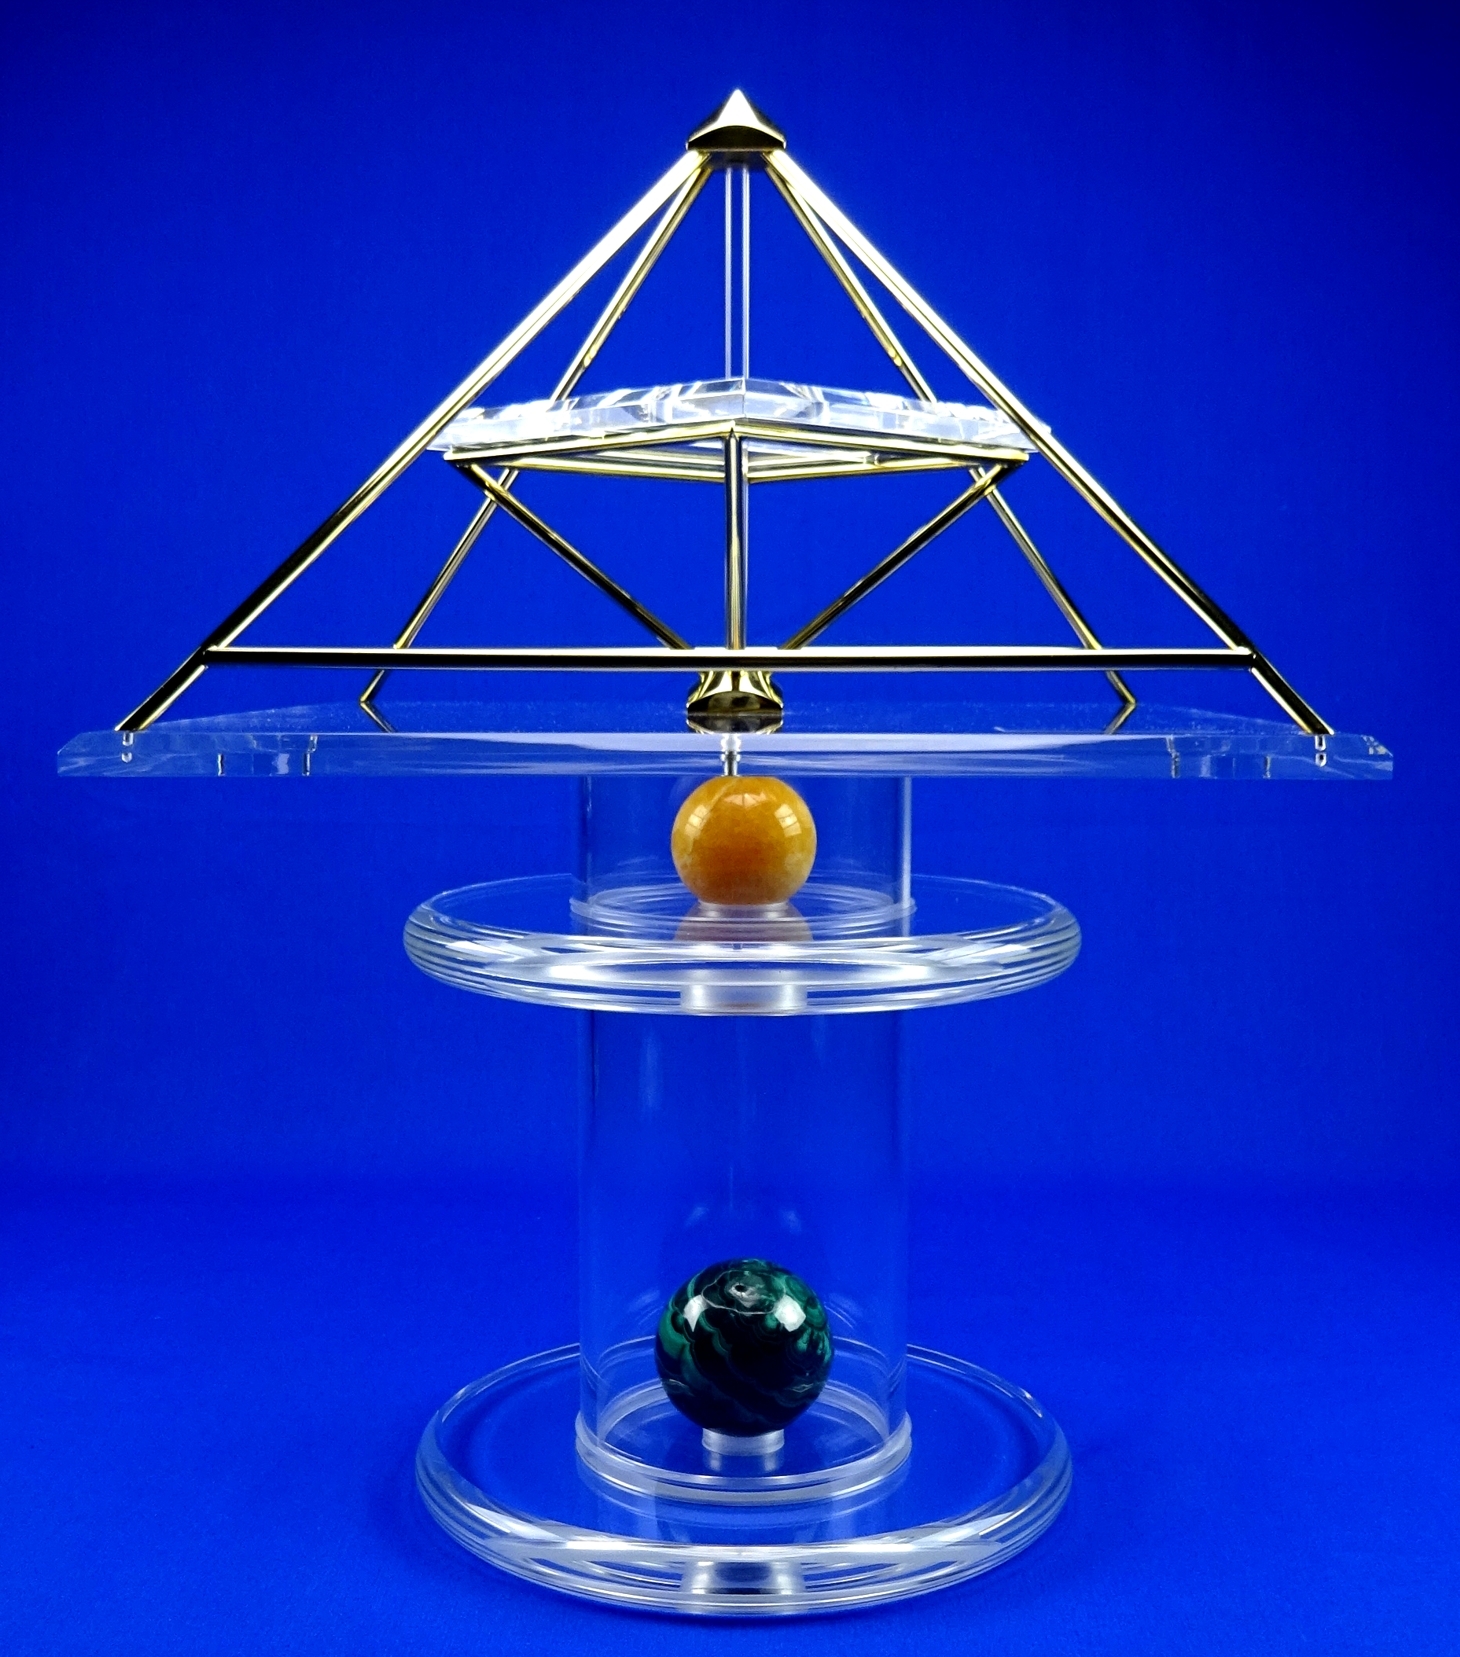 Acrylrohr für Energiepyramide Modell A 5032